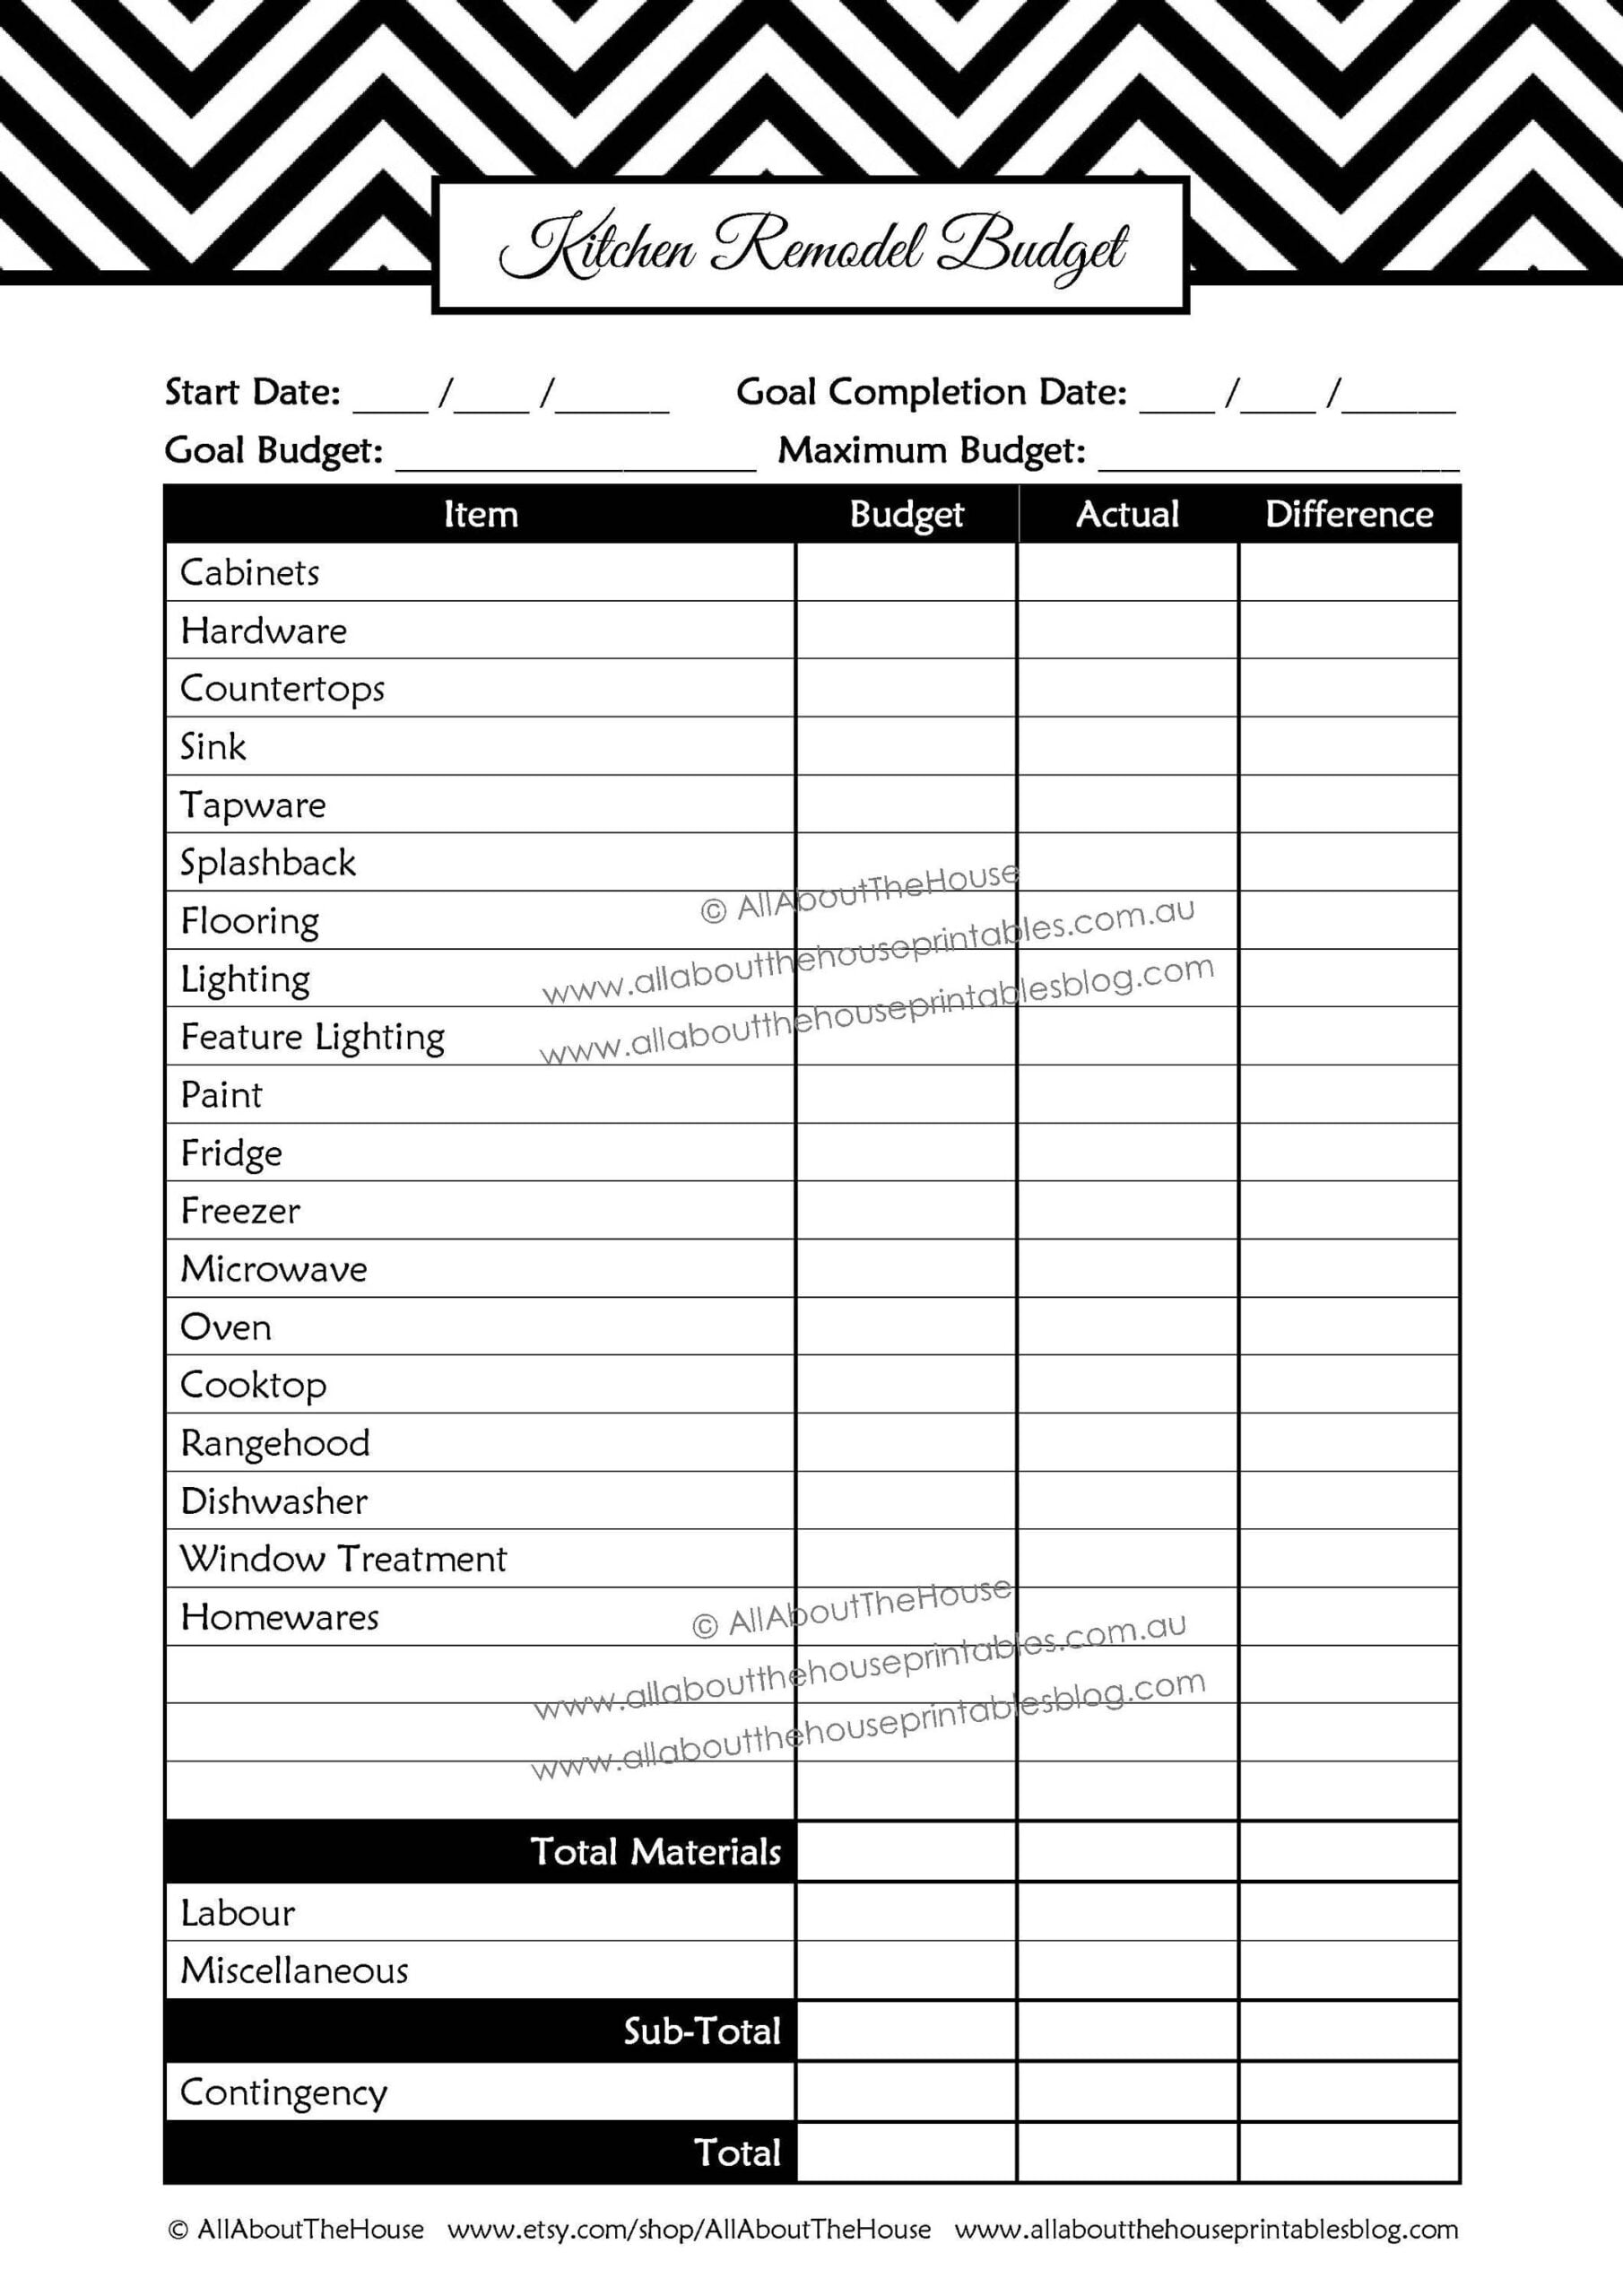 Printable Home Renovation Checklist Template